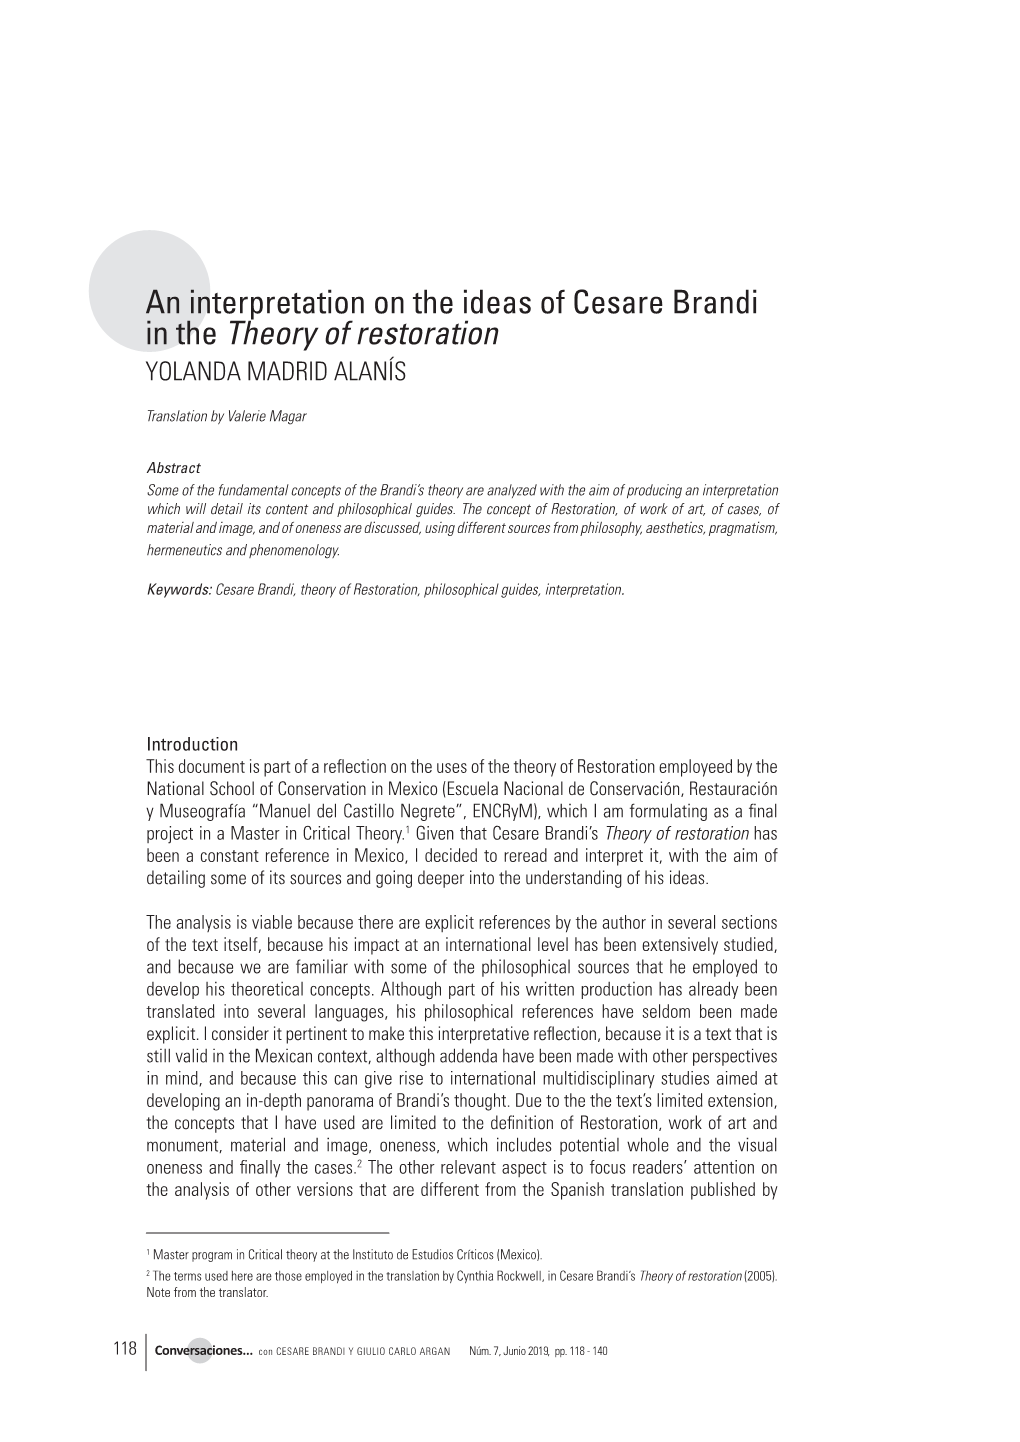 An Interpretation on the Ideas of Cesare Brandi in the Theory of Restoration YOLANDA MADRID ALANÍS